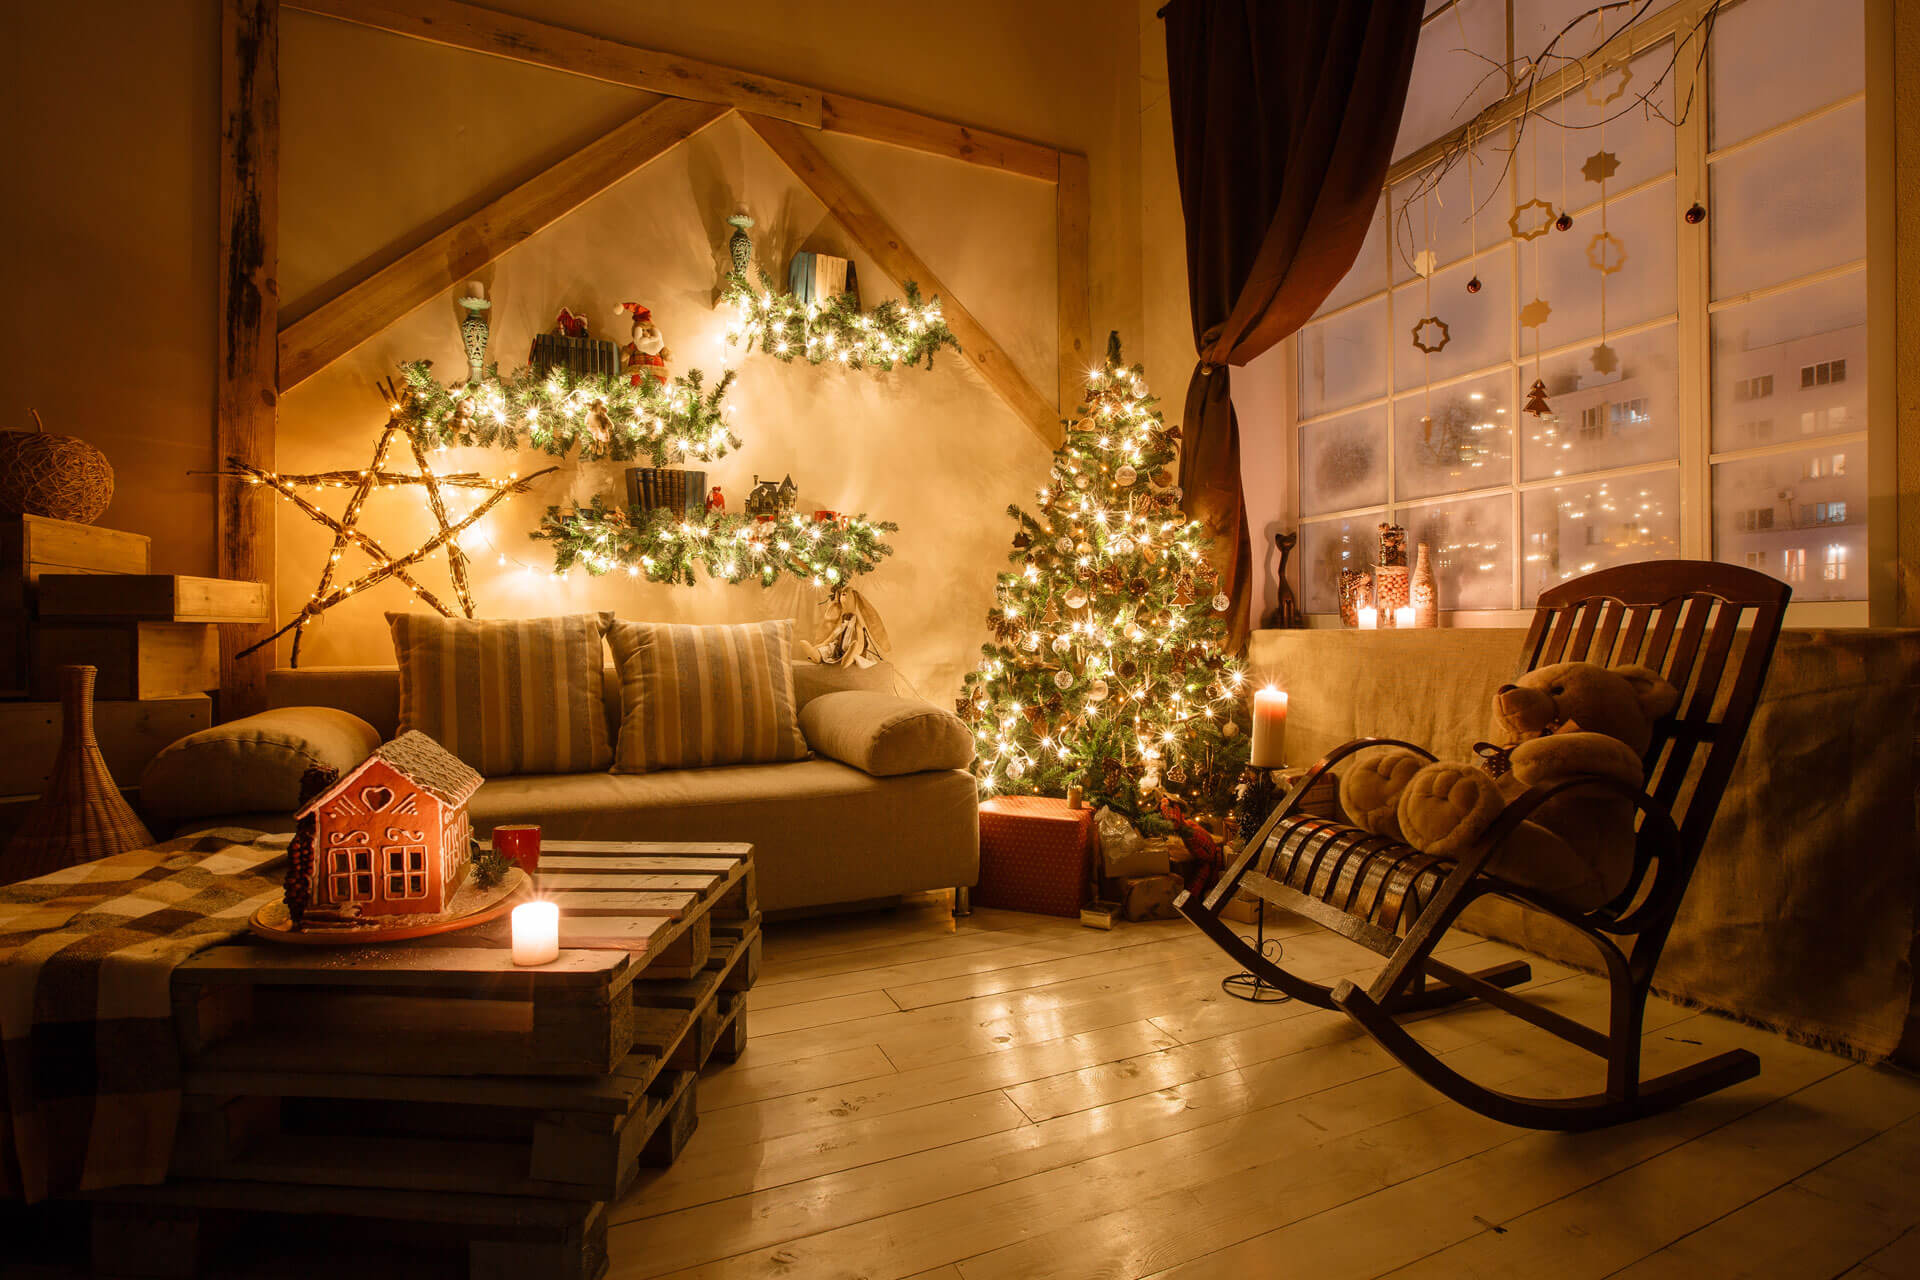 6 Best DIY Christmas decorations